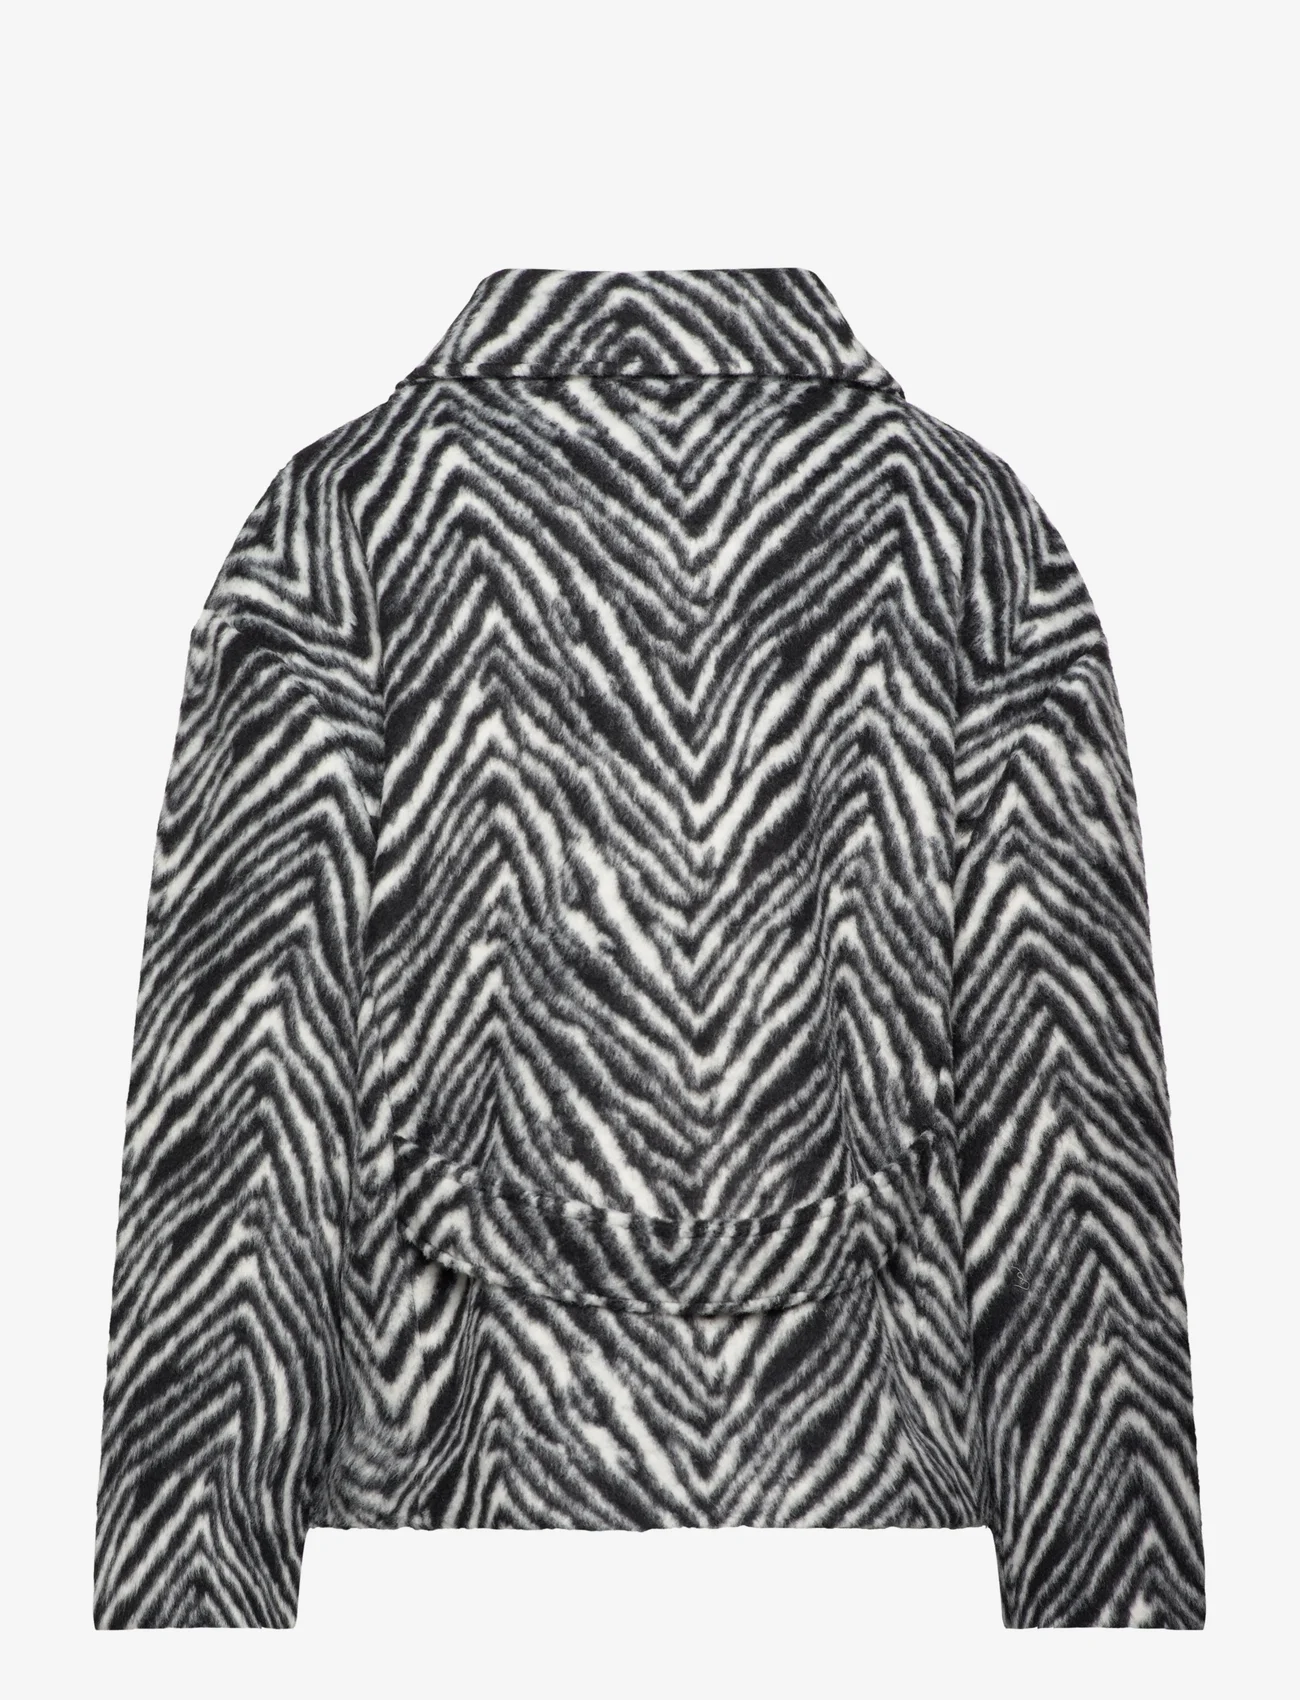 MAUD - Gaia Jacket - vinterjackor - zebra print - 1